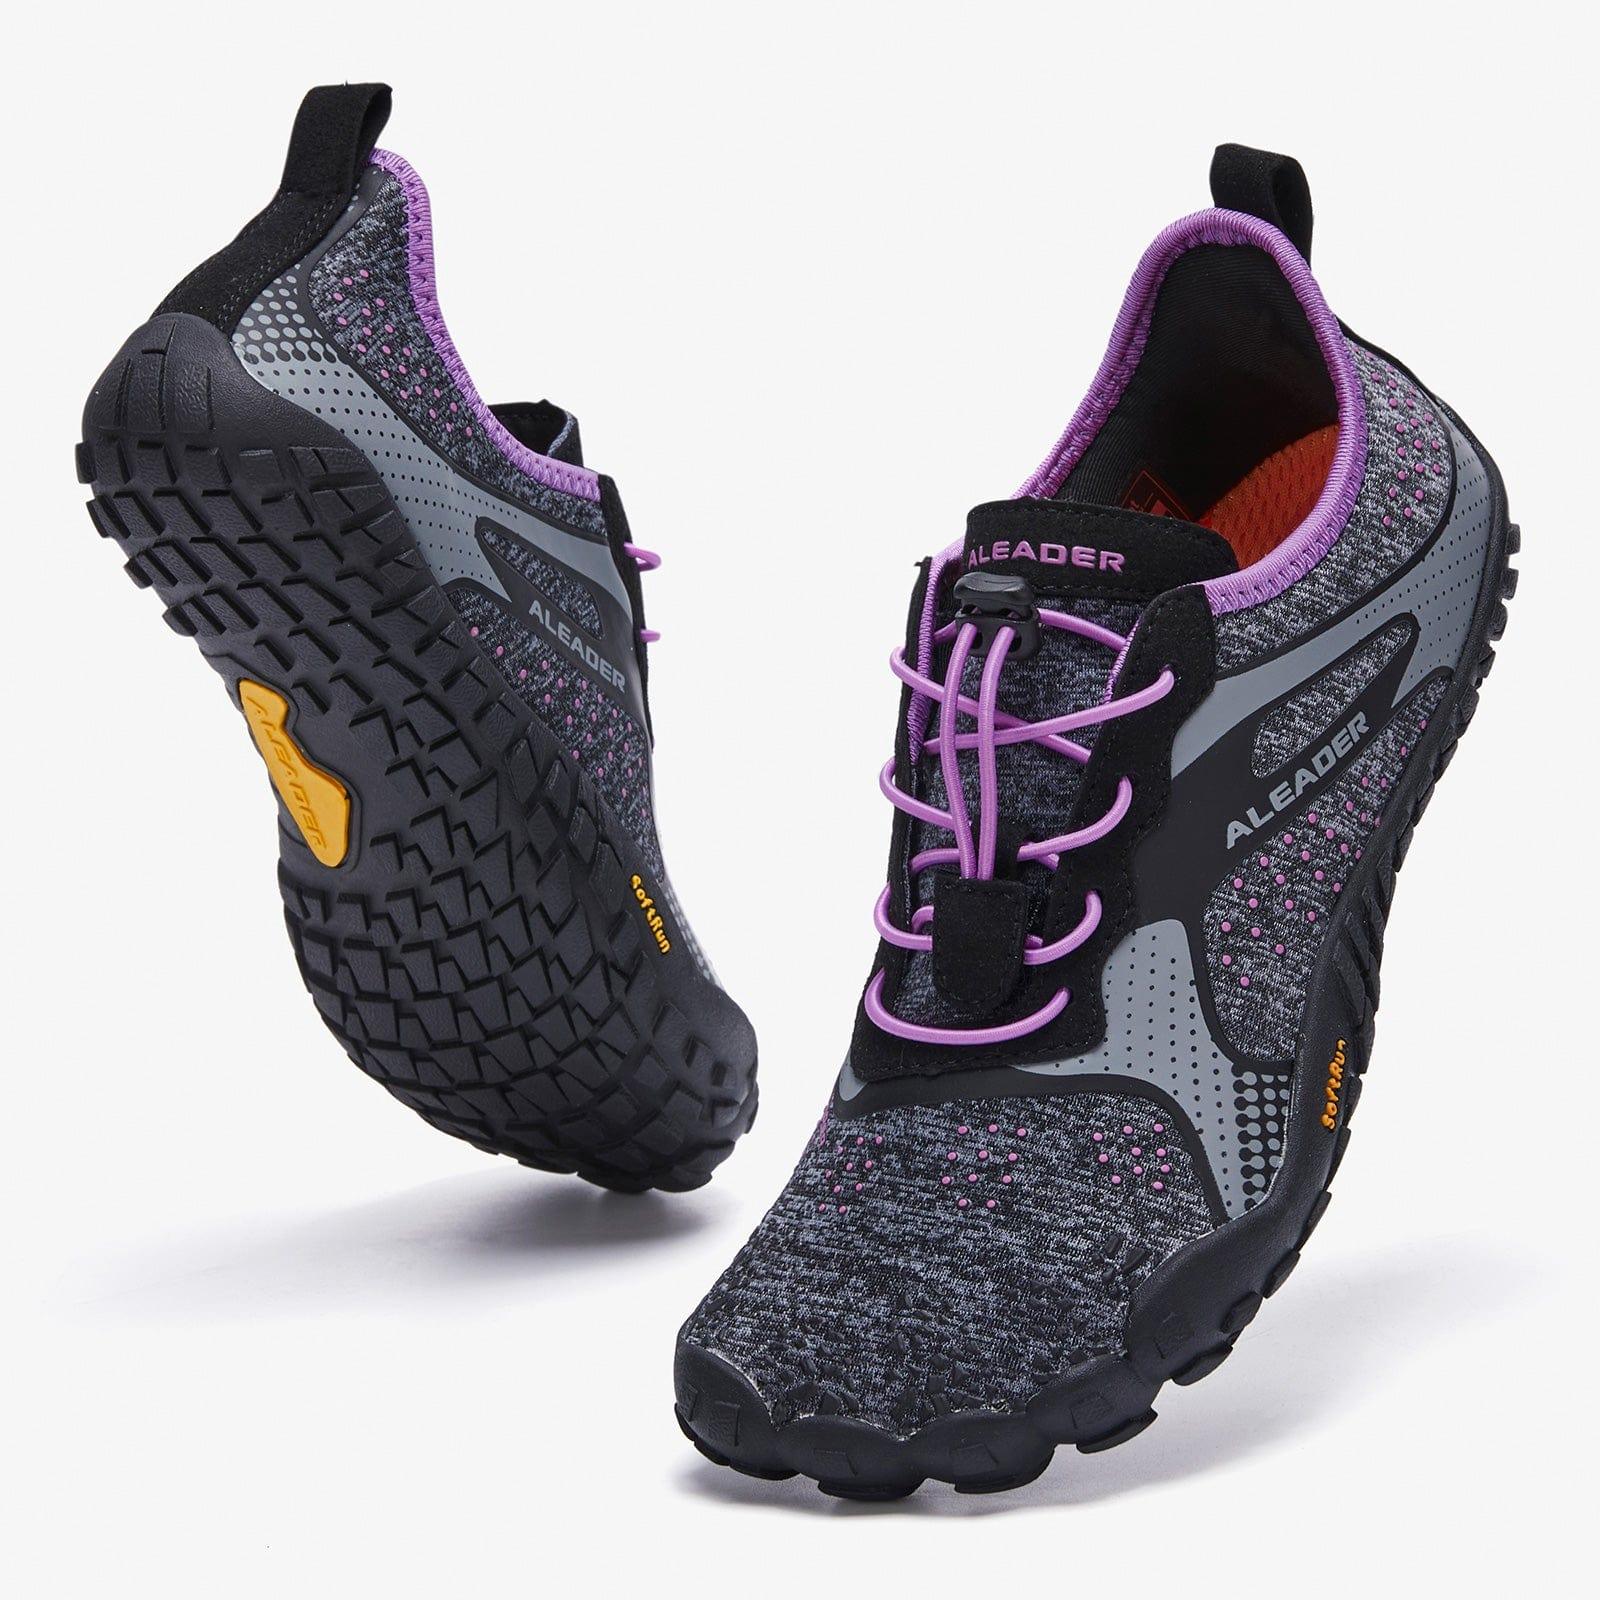 aleader Aleader Women‘s Barefoot Trail Running Shoes - Black/Purple